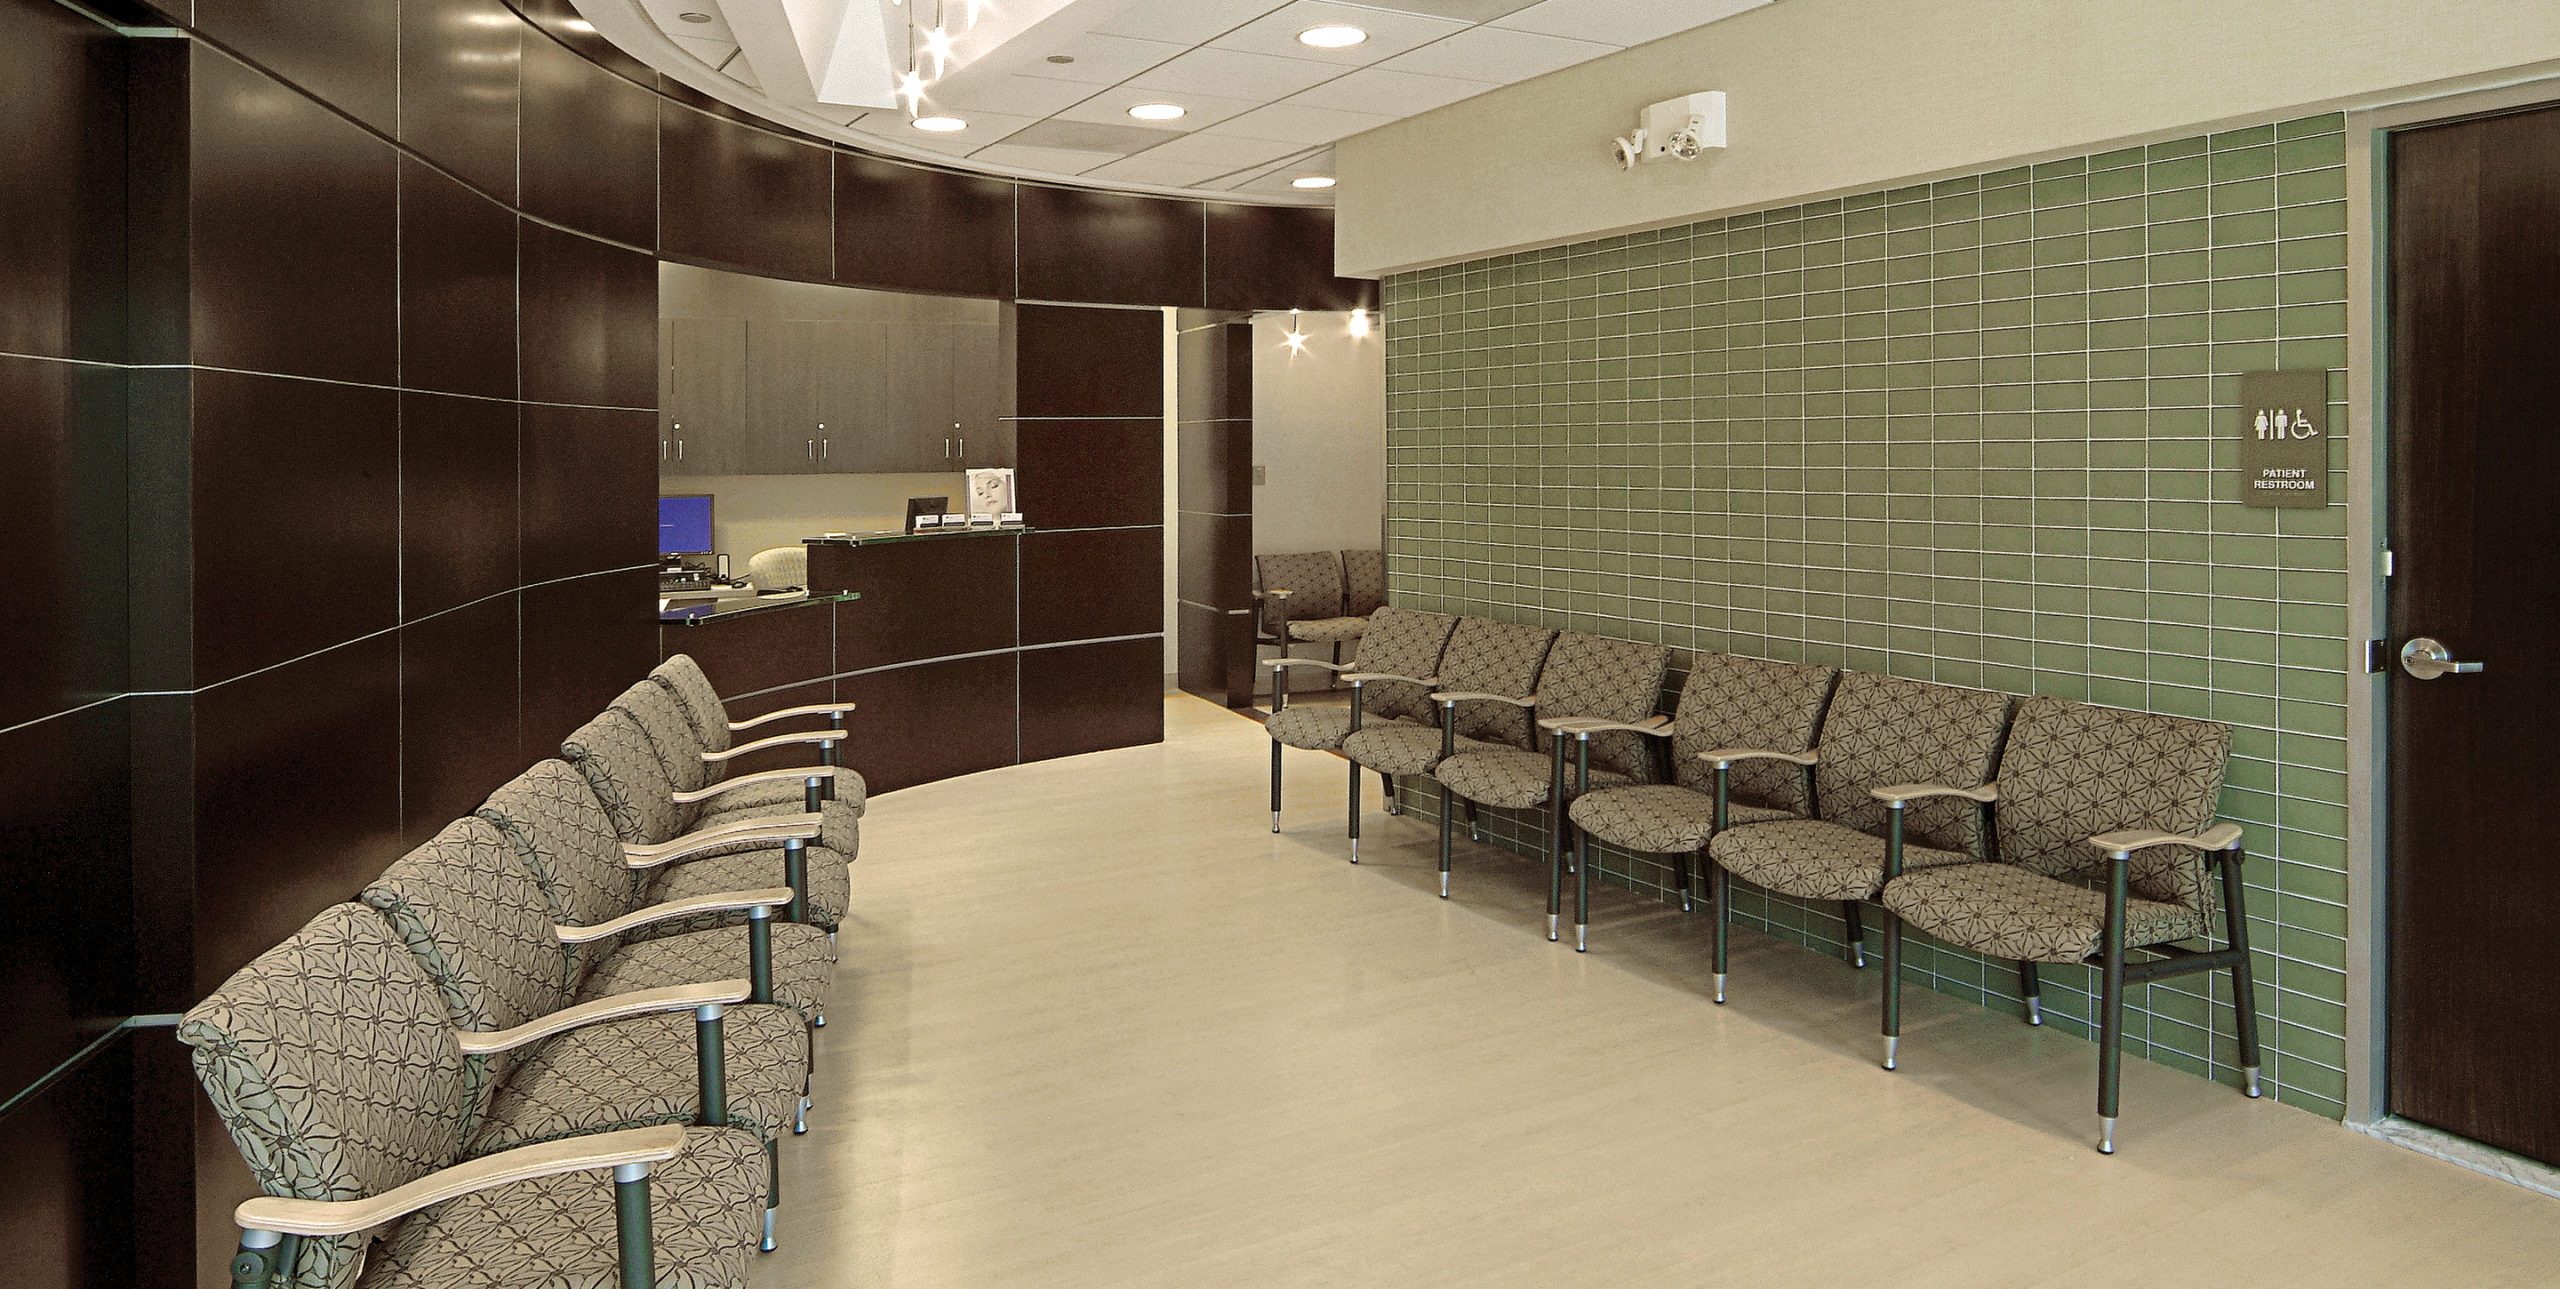 Waiting room at Stony Brook Plastic Surgery at 24 Research Way, East Setauket